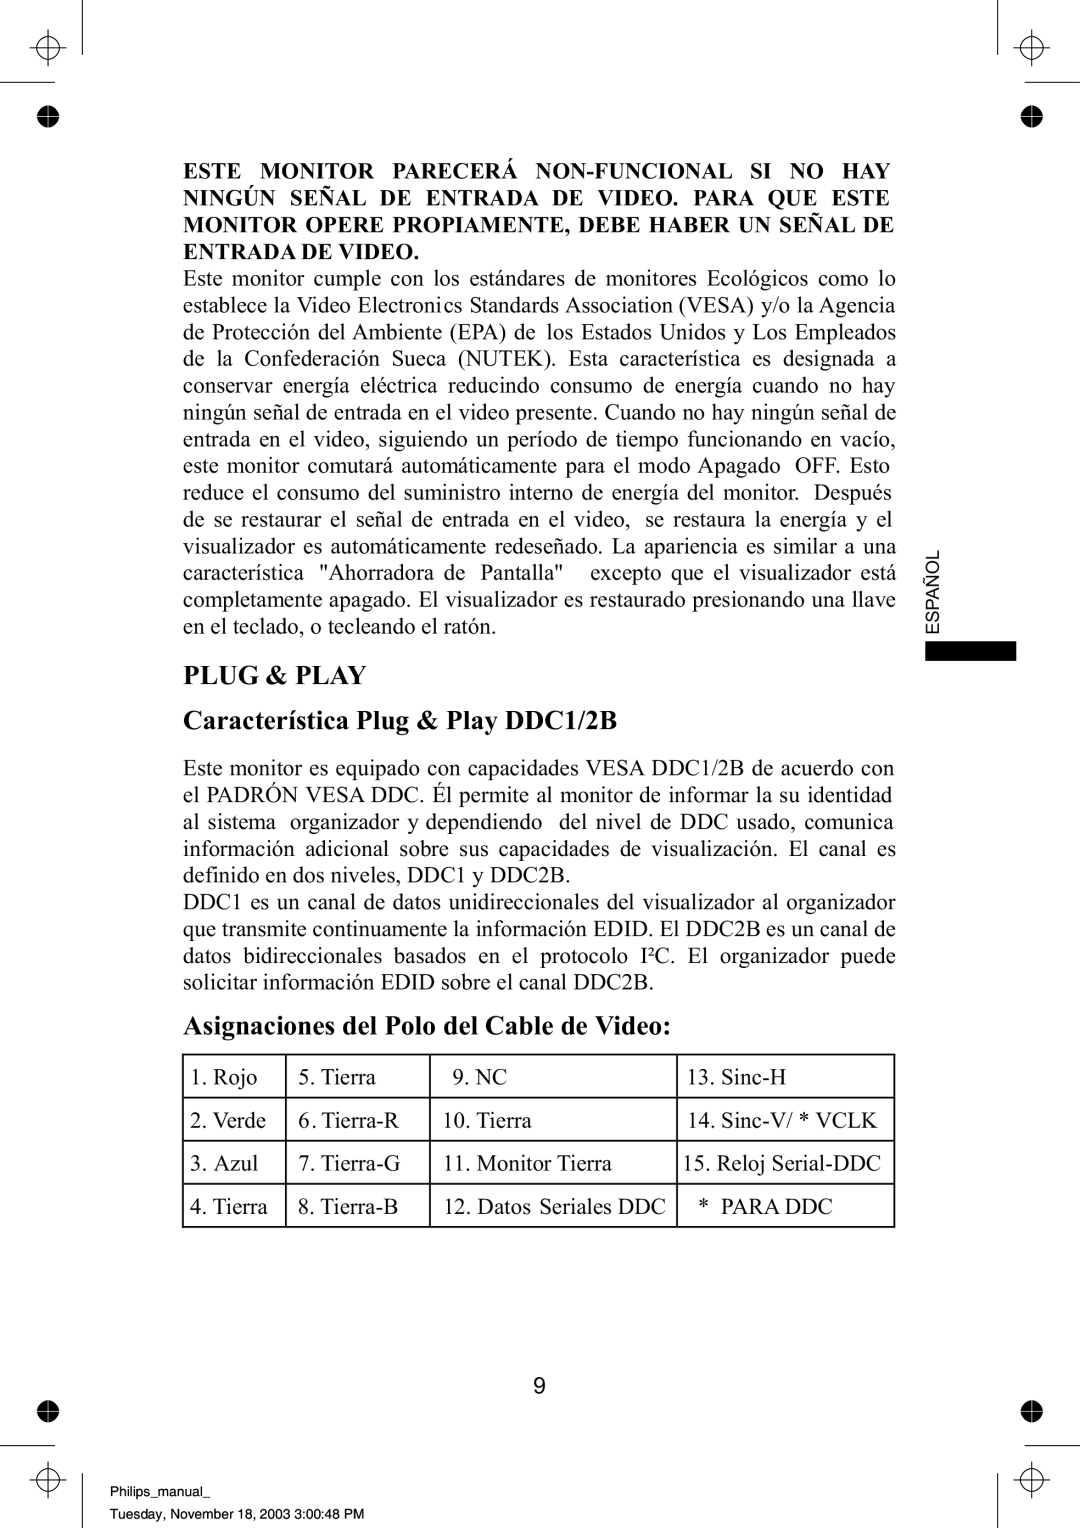 Philips 109B61 manual PLUG & PLAY Característica Plug & Play DDC1/2B, Asignaciones del Polo del Cable de Video 